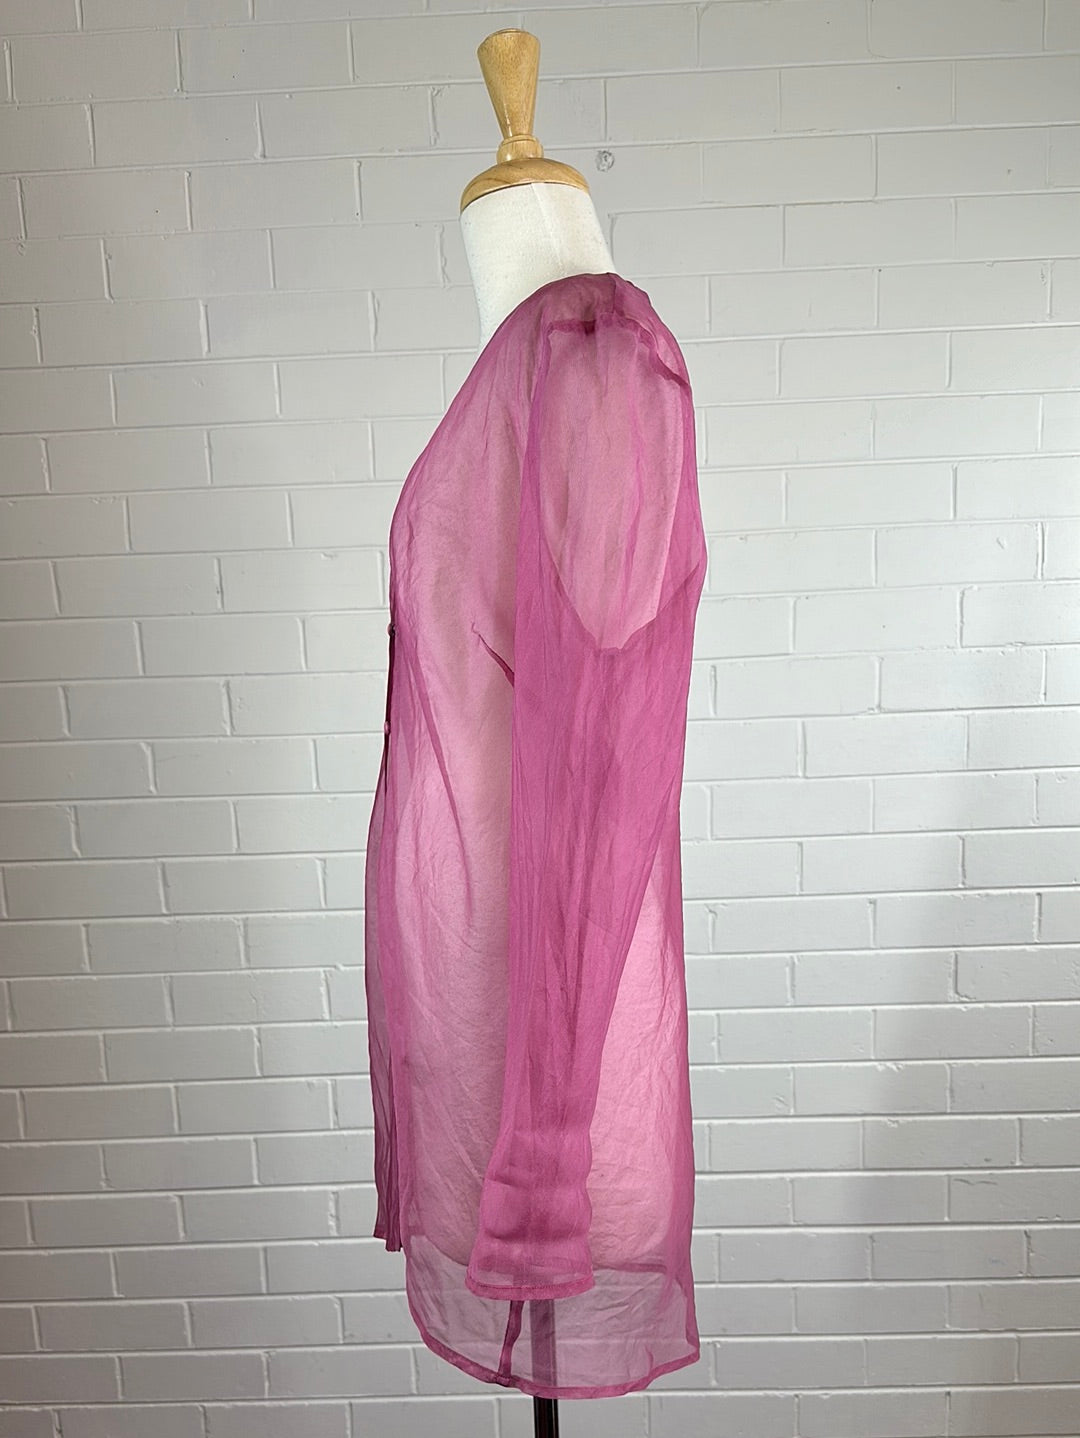 Von Troska | vintage 90's | jacket | size 14 | single breasted | 100% silk | made in Australia